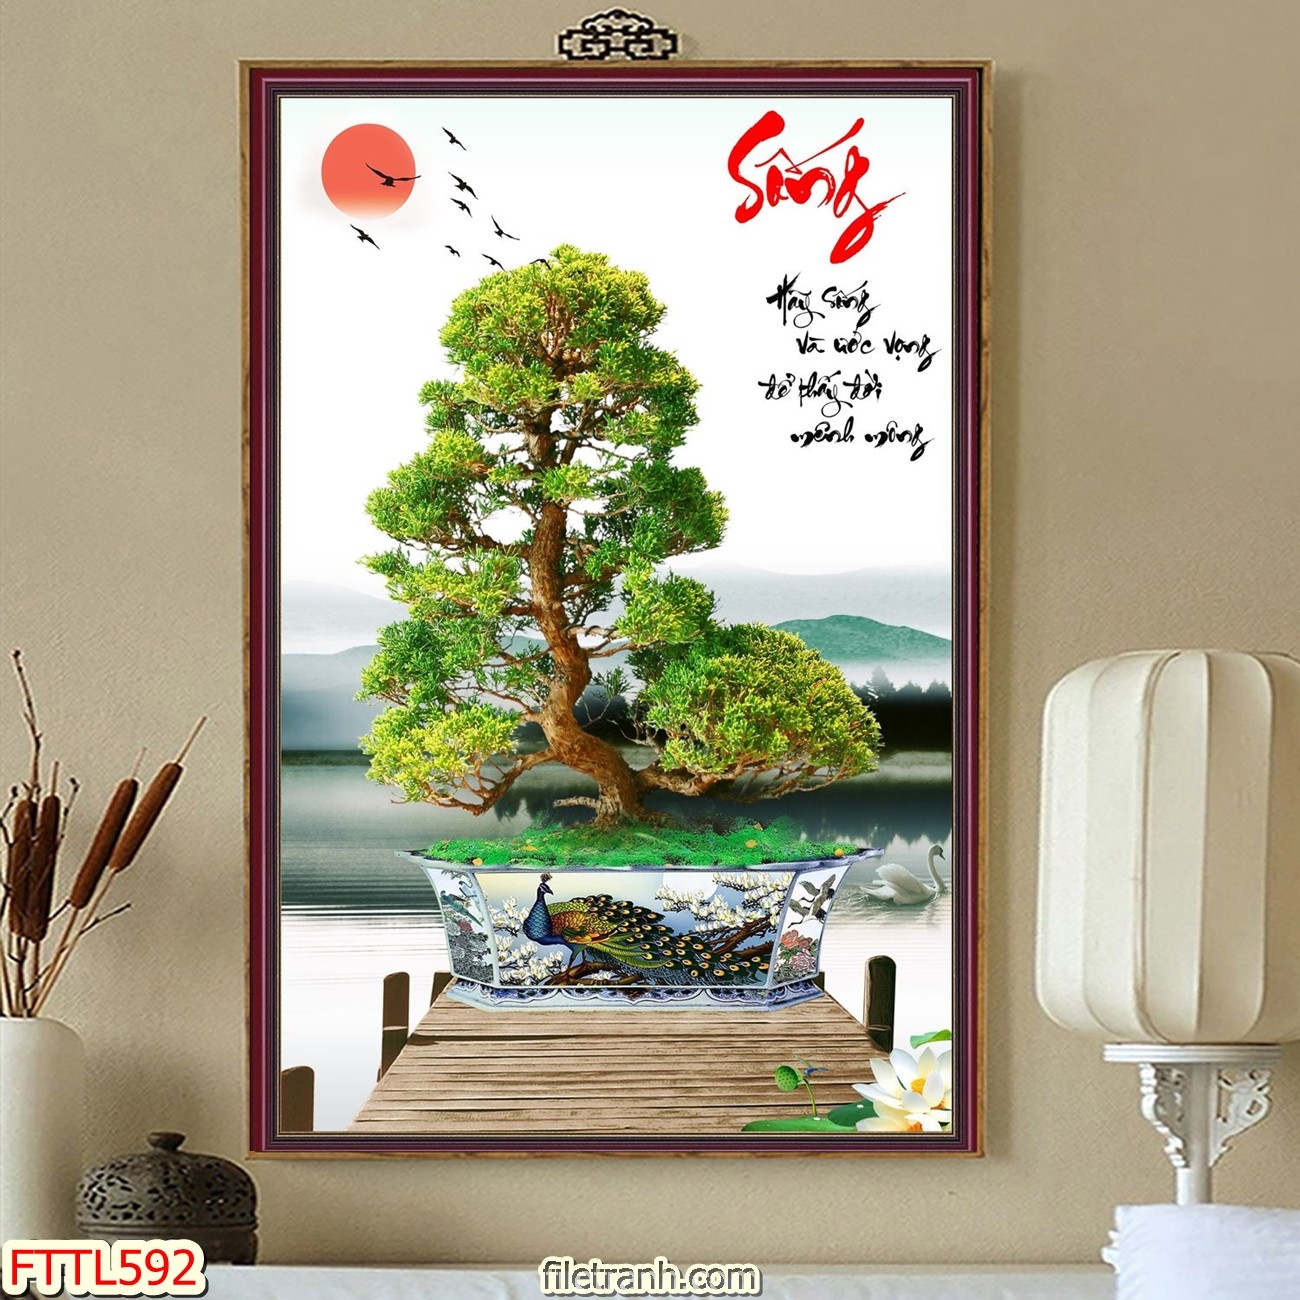 https://filetranh.com/file-tranh-chau-mai-bonsai/file-tranh-chau-mai-bonsai-fttl592.html